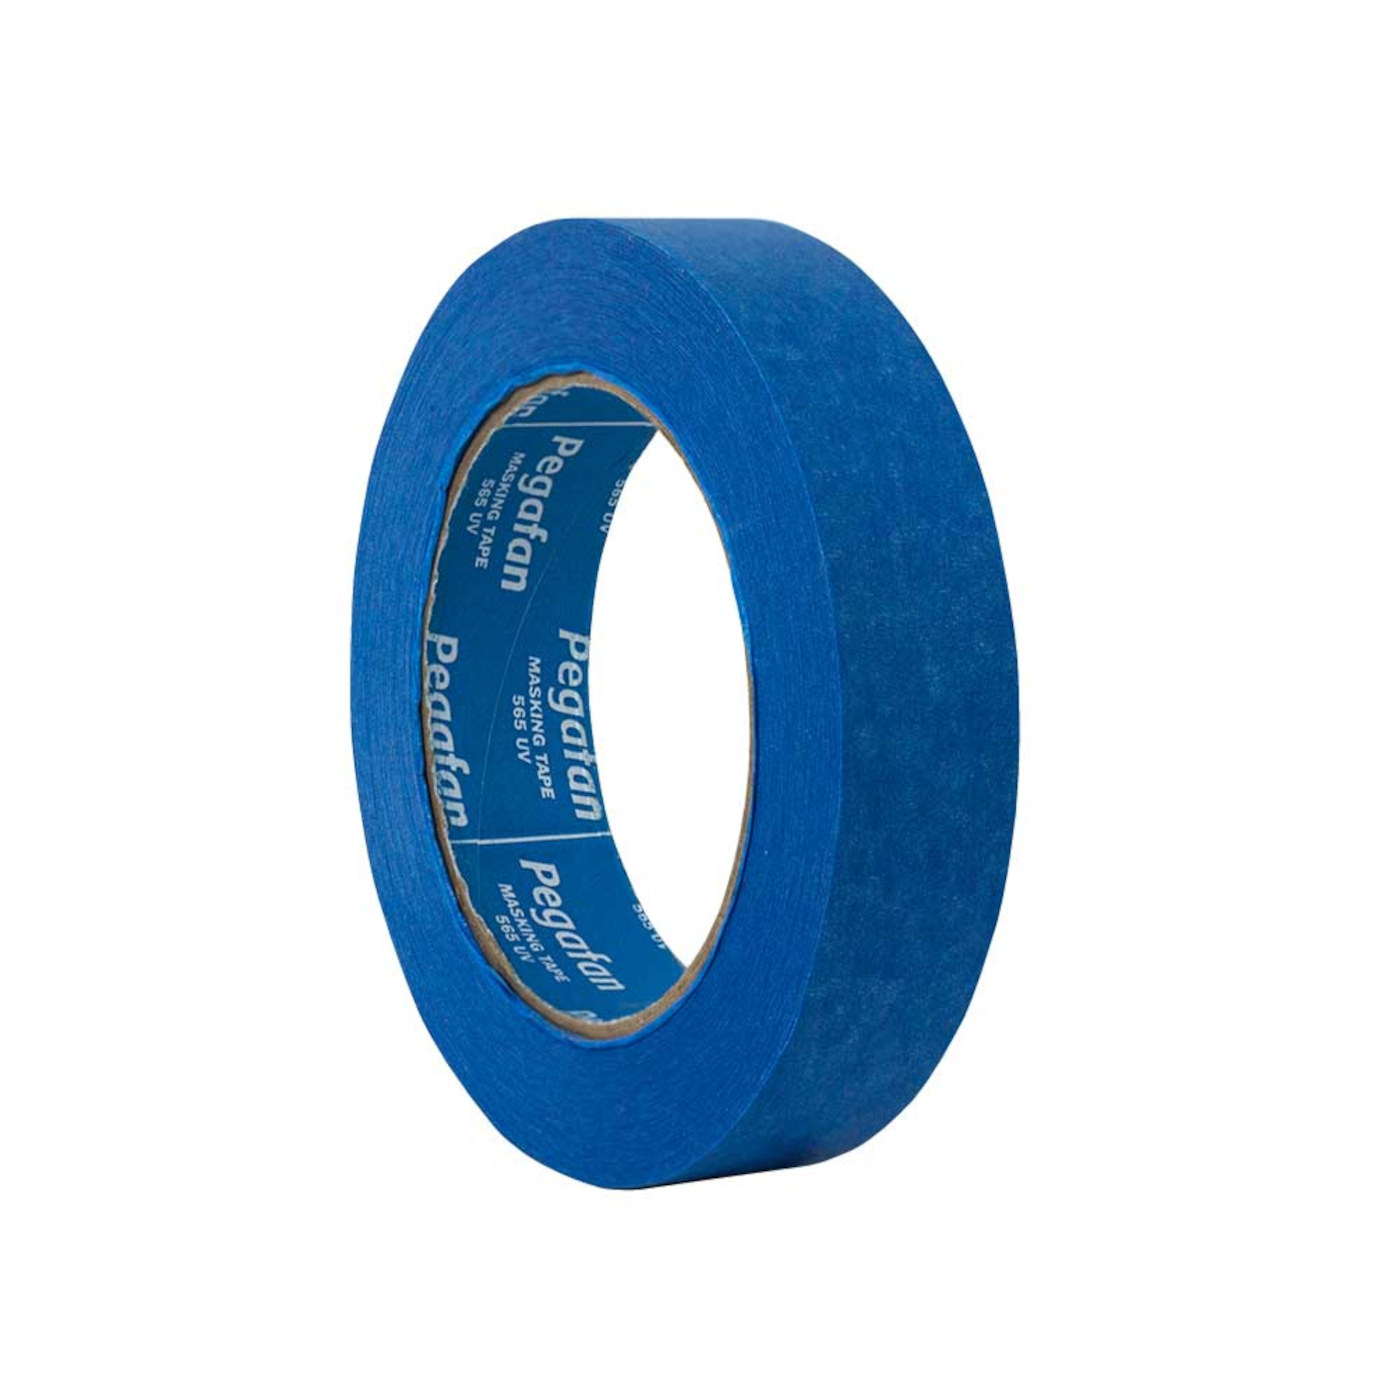 Cinta masking tape azul 1 x 15 yd Shurtape - Ofimarket